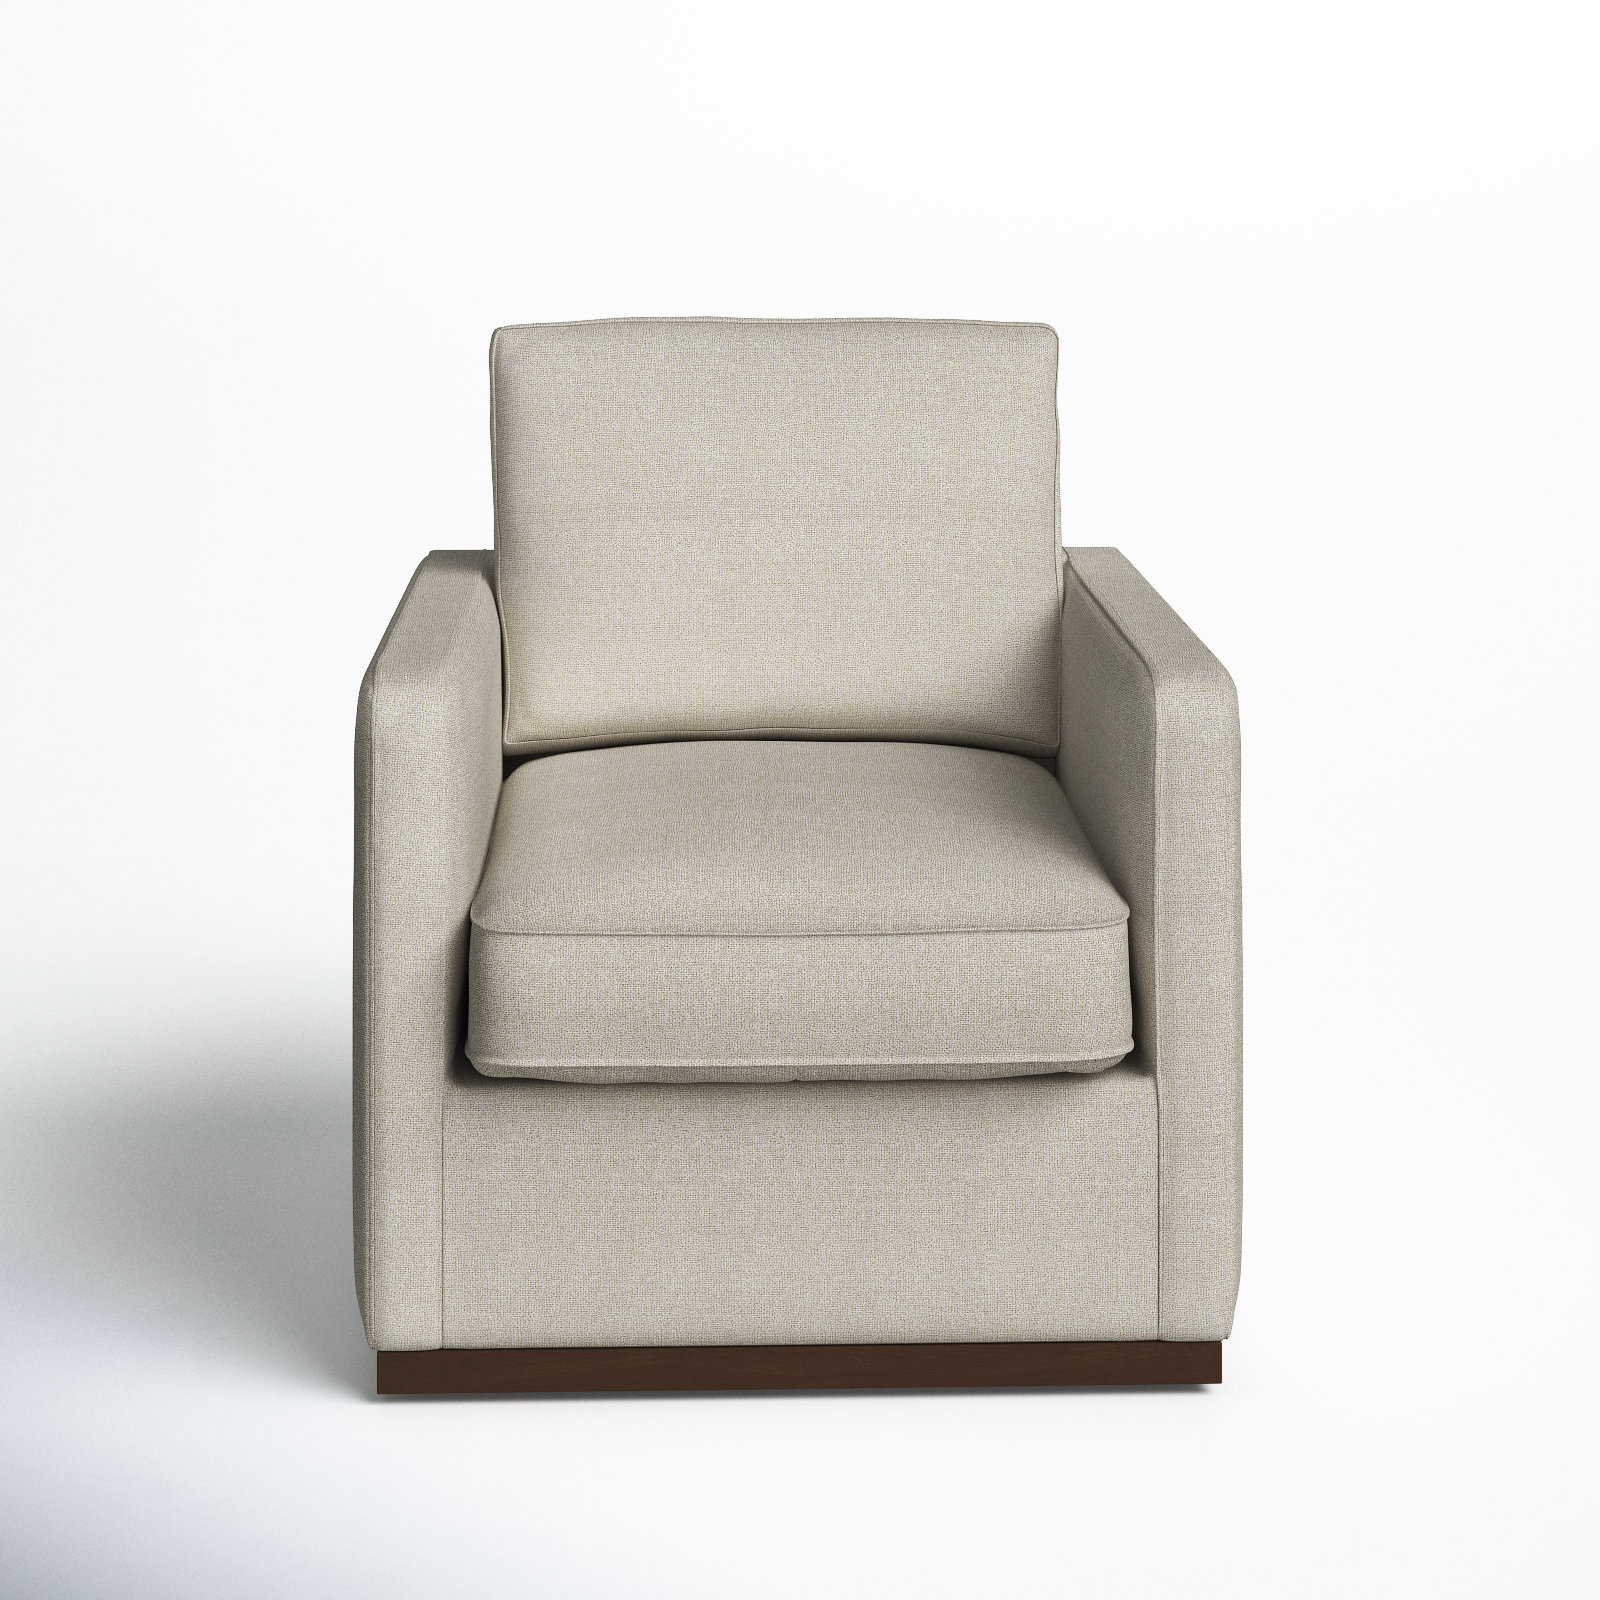 Bobbi Upholstered Swivel Armchair Fabric: Effie Flax Performance Linen